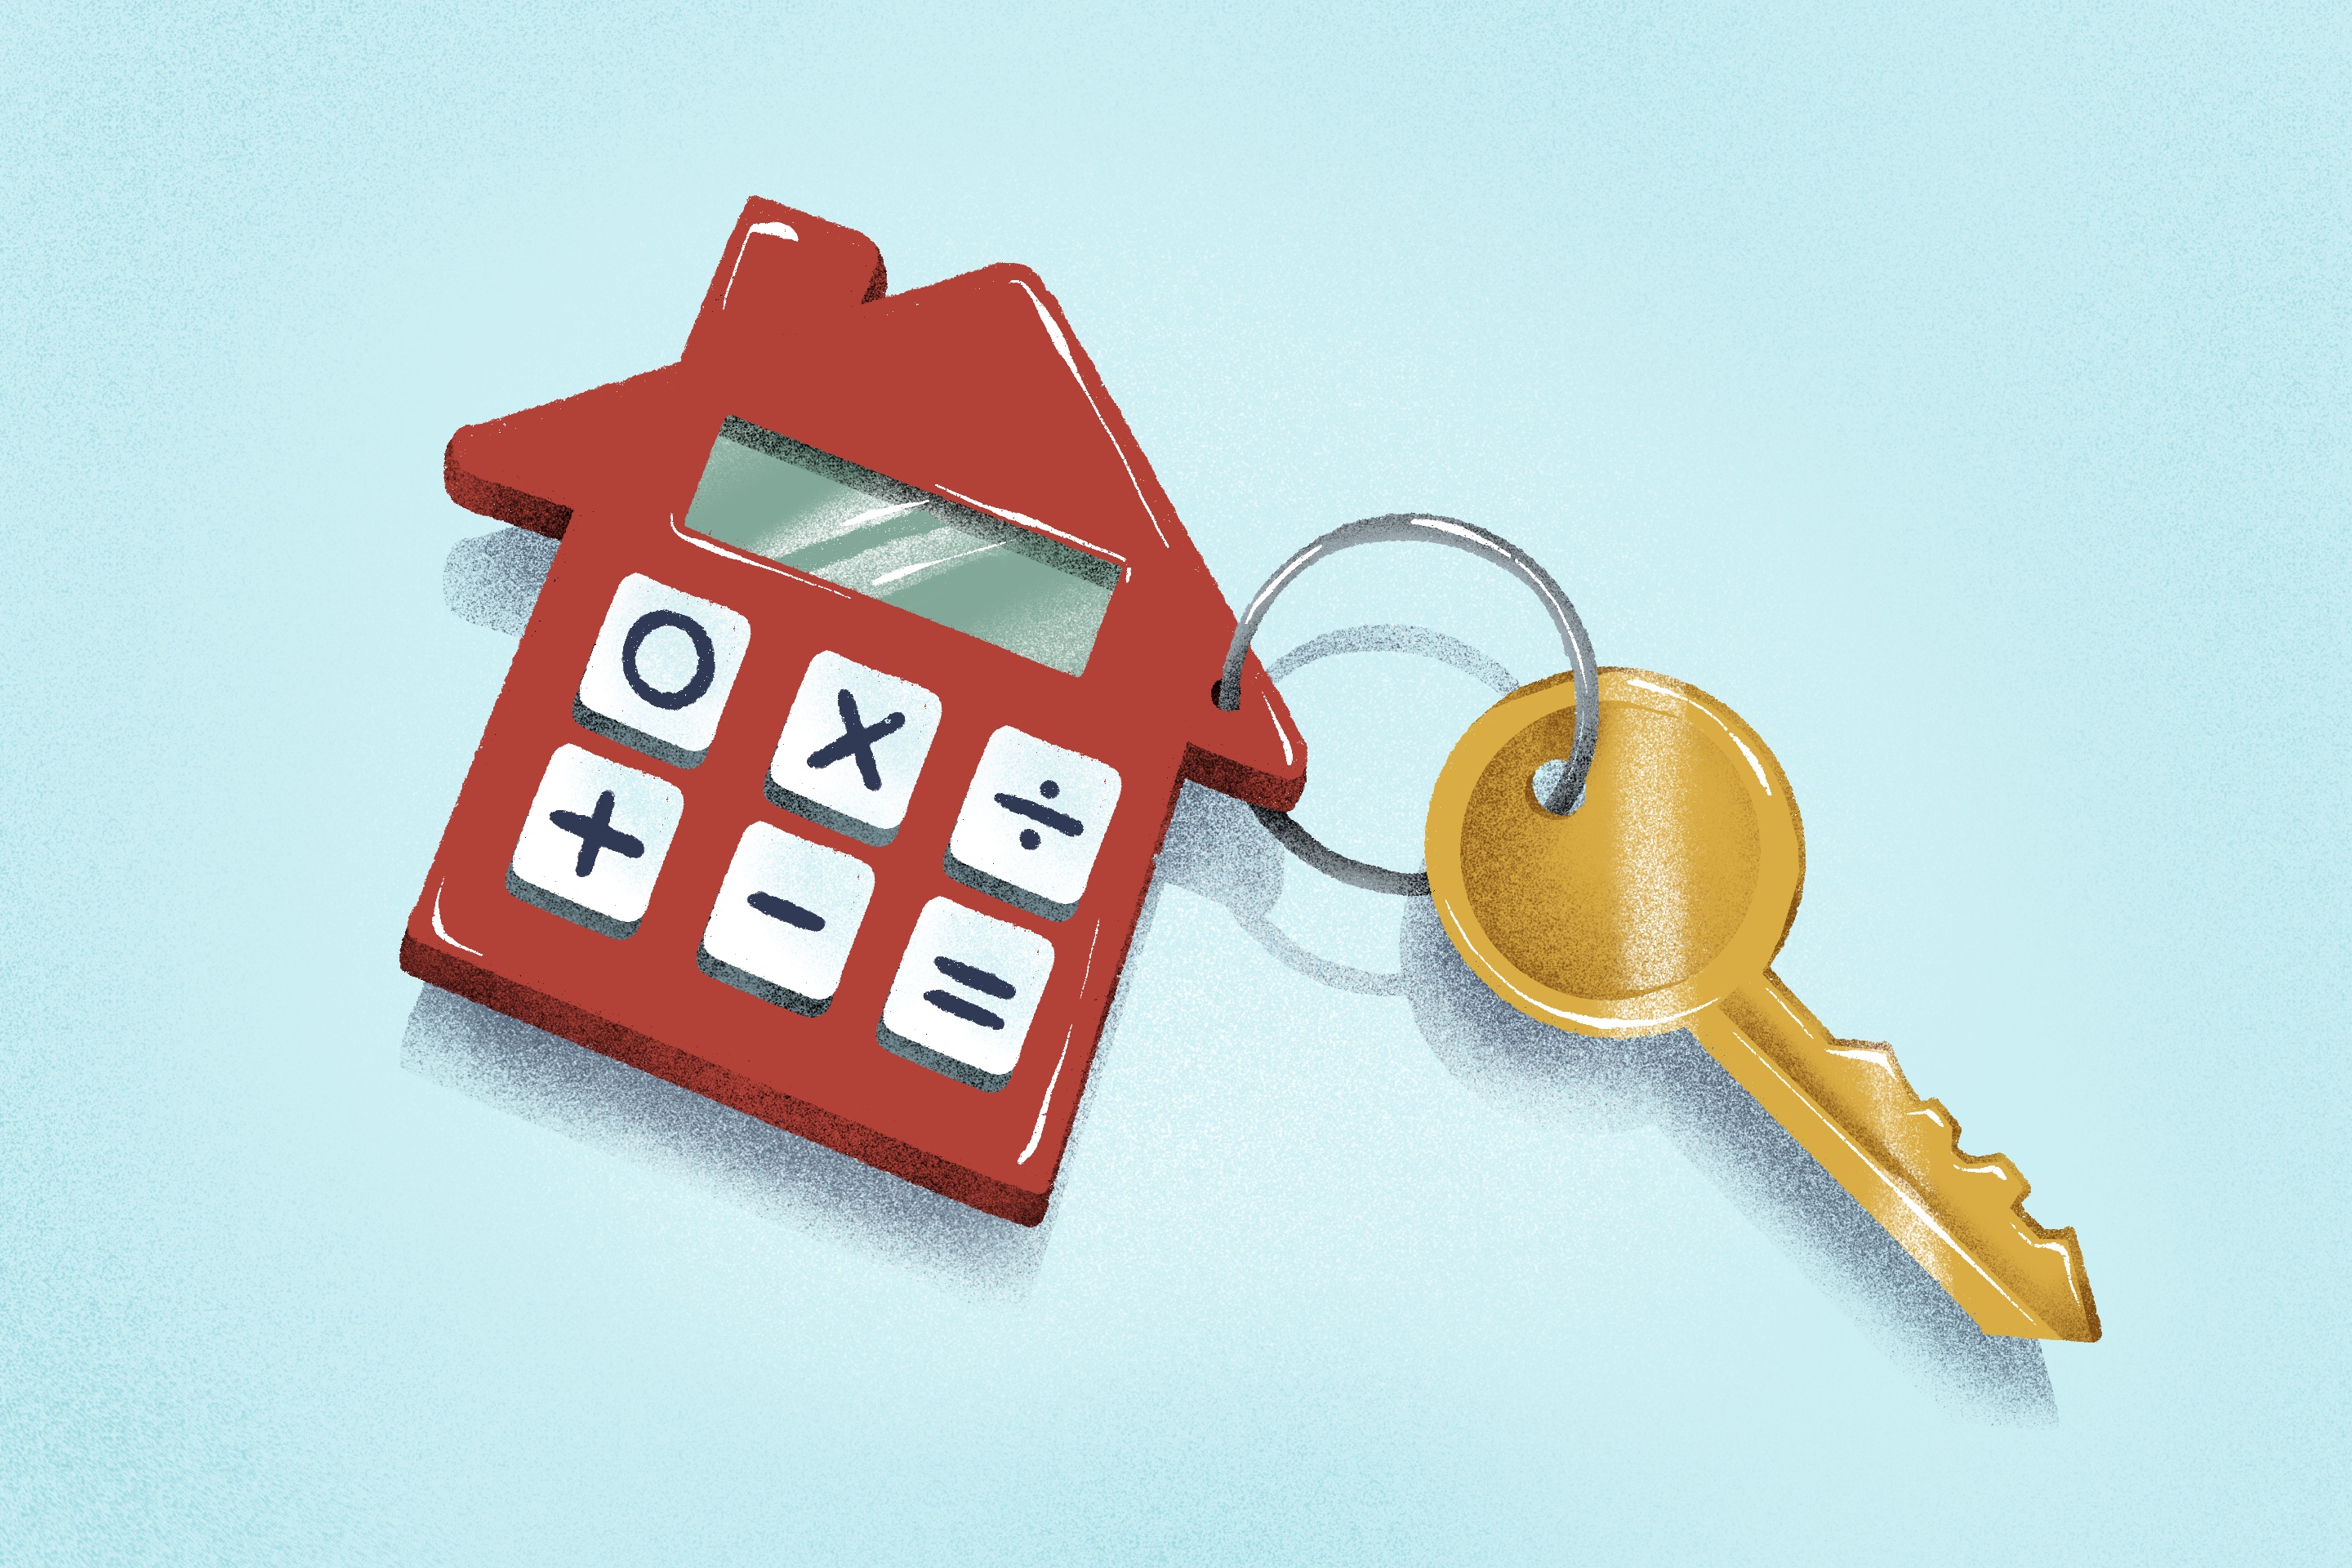 Mortgage Refinance Calculator